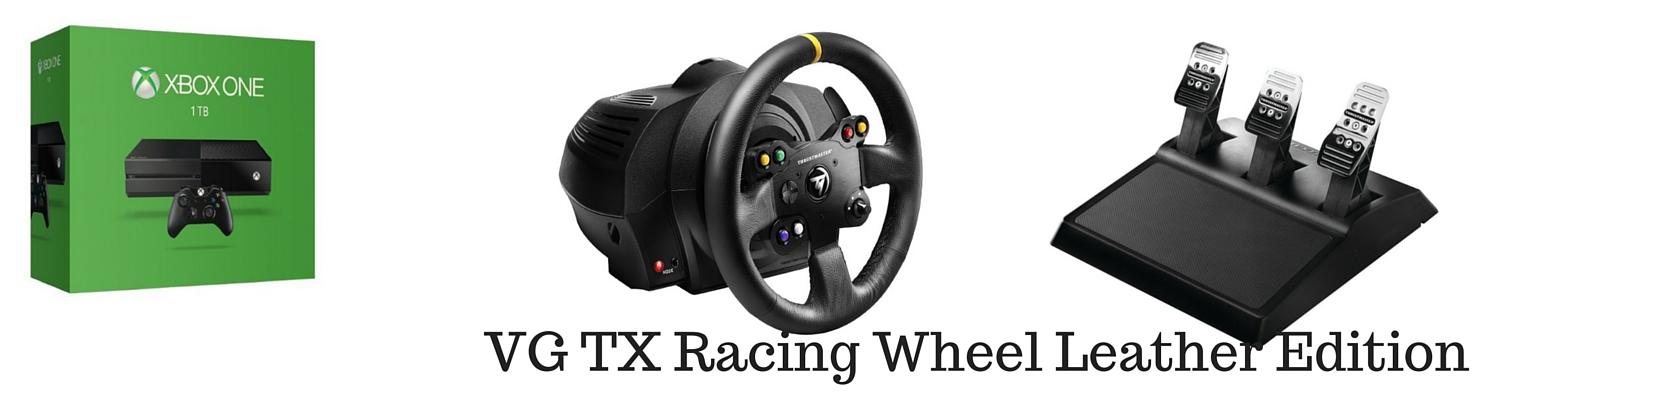 XboxOne Racing Wheel: Thrustmaster VG-TX Racing Wheel Leather Edition Complete